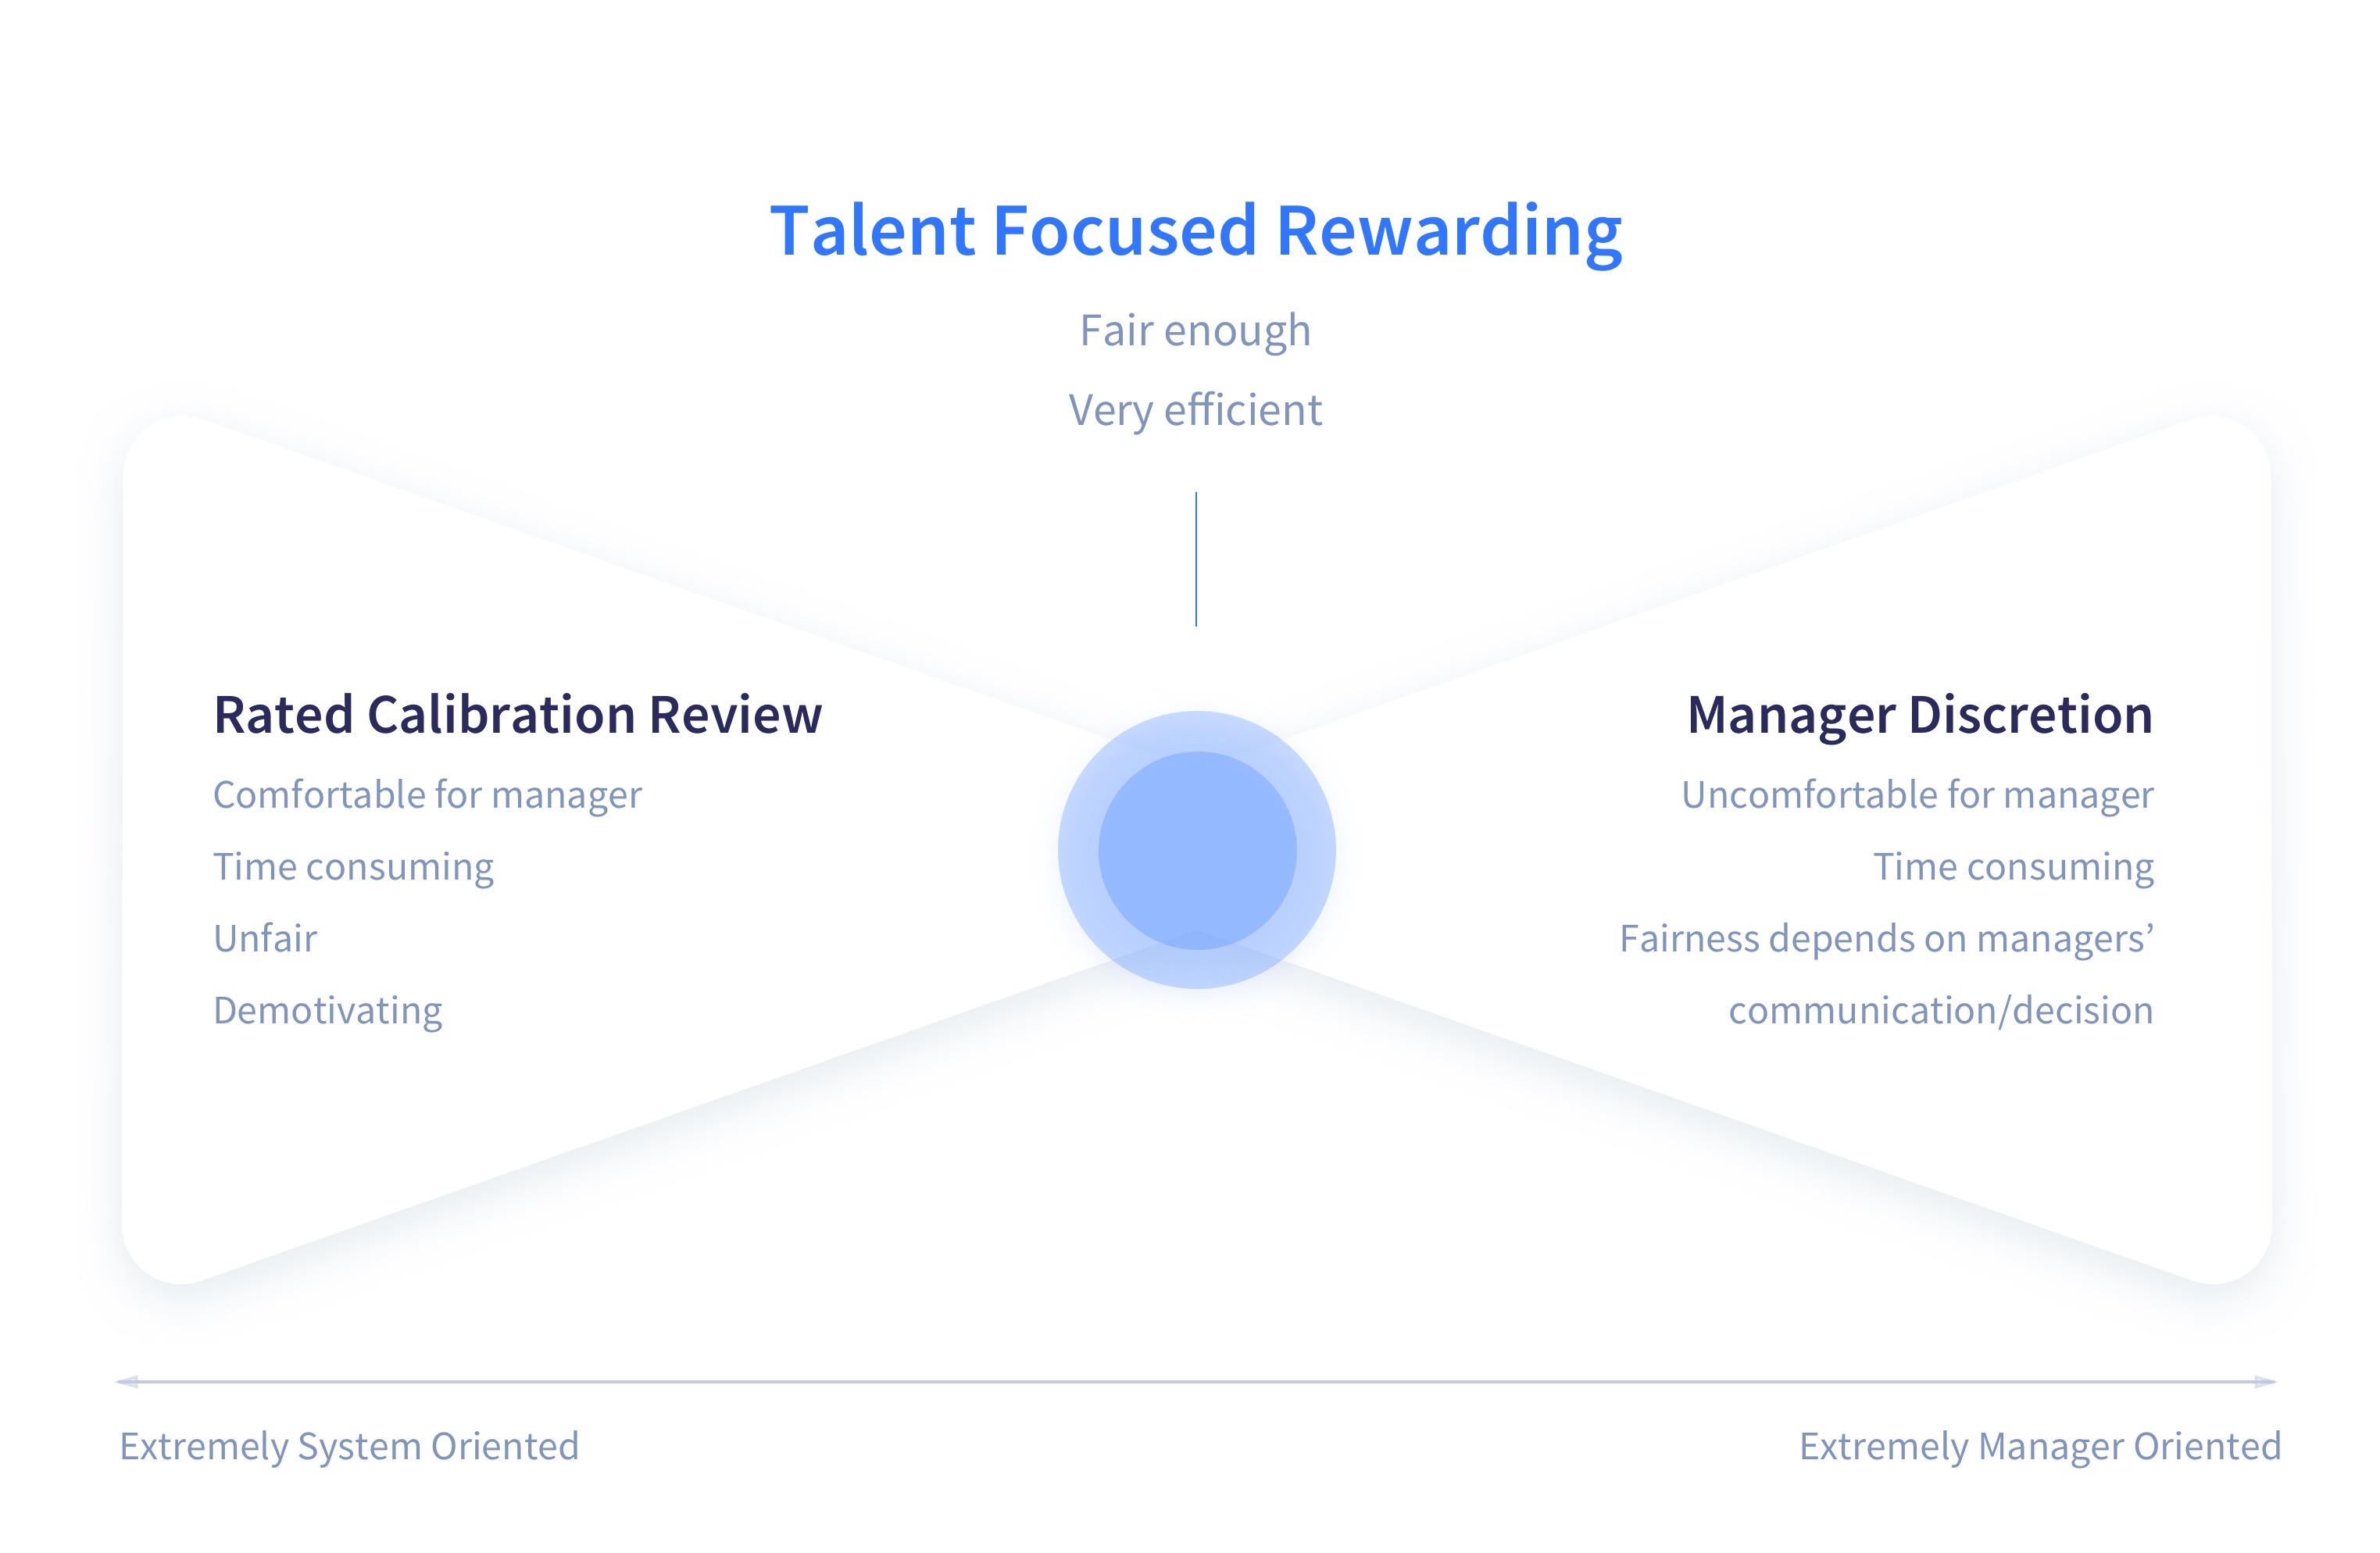 Talent focused rewarding